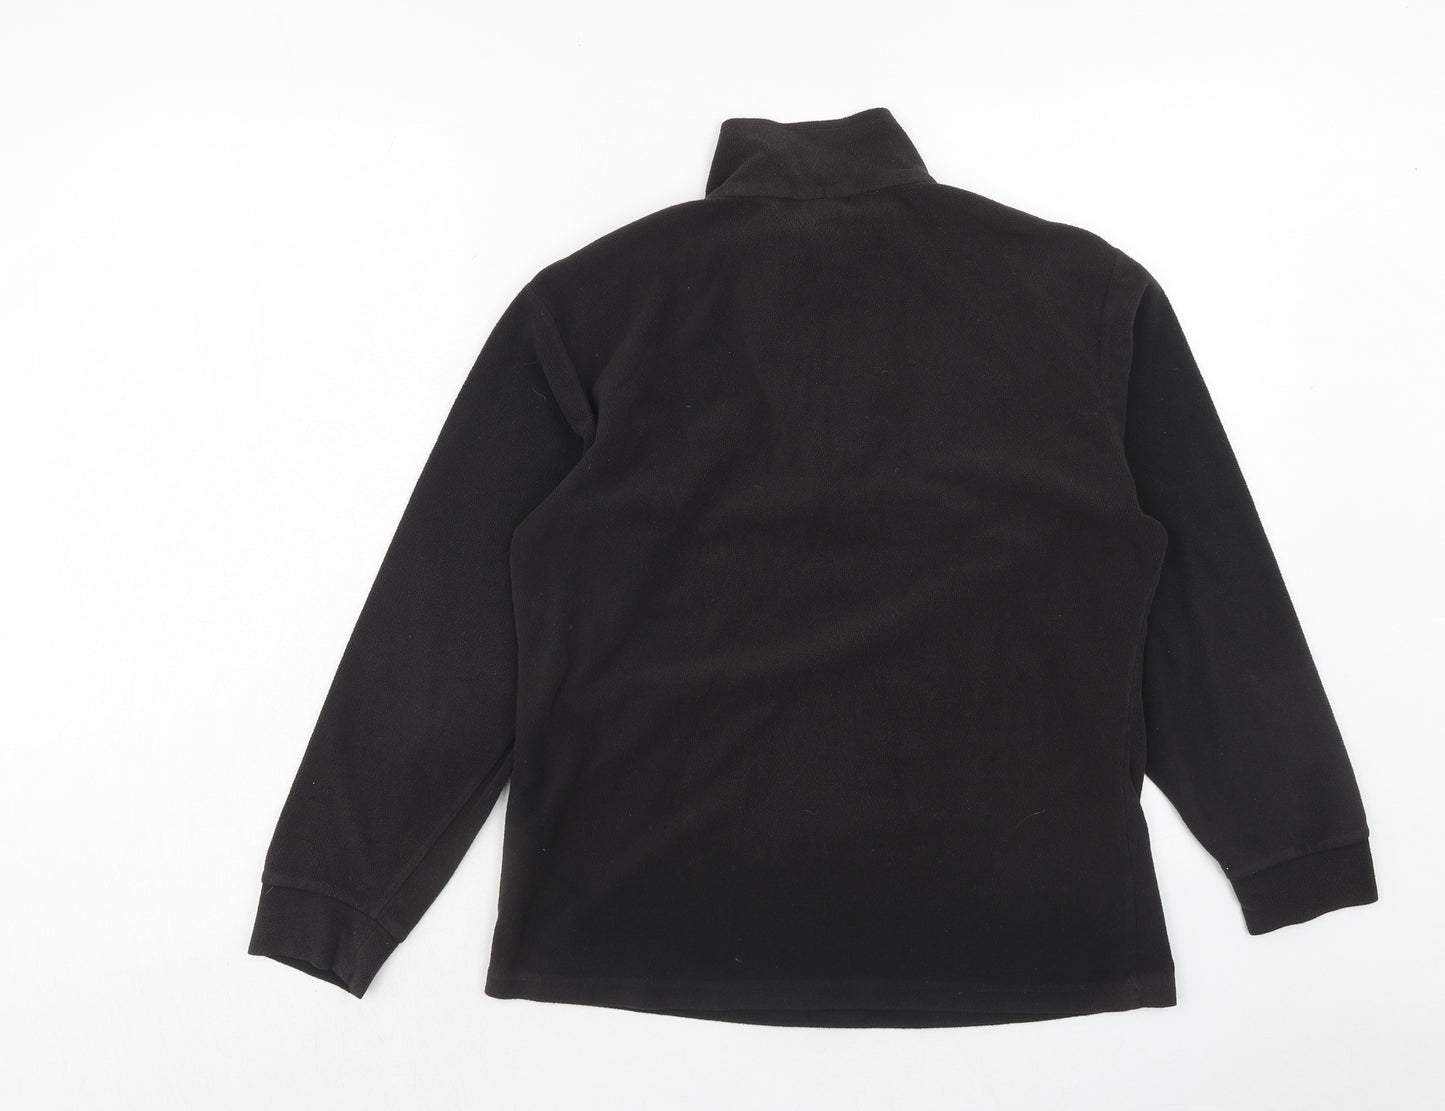 Trespass Womens Black Polyester Pullover Sweatshirt Size L Zip